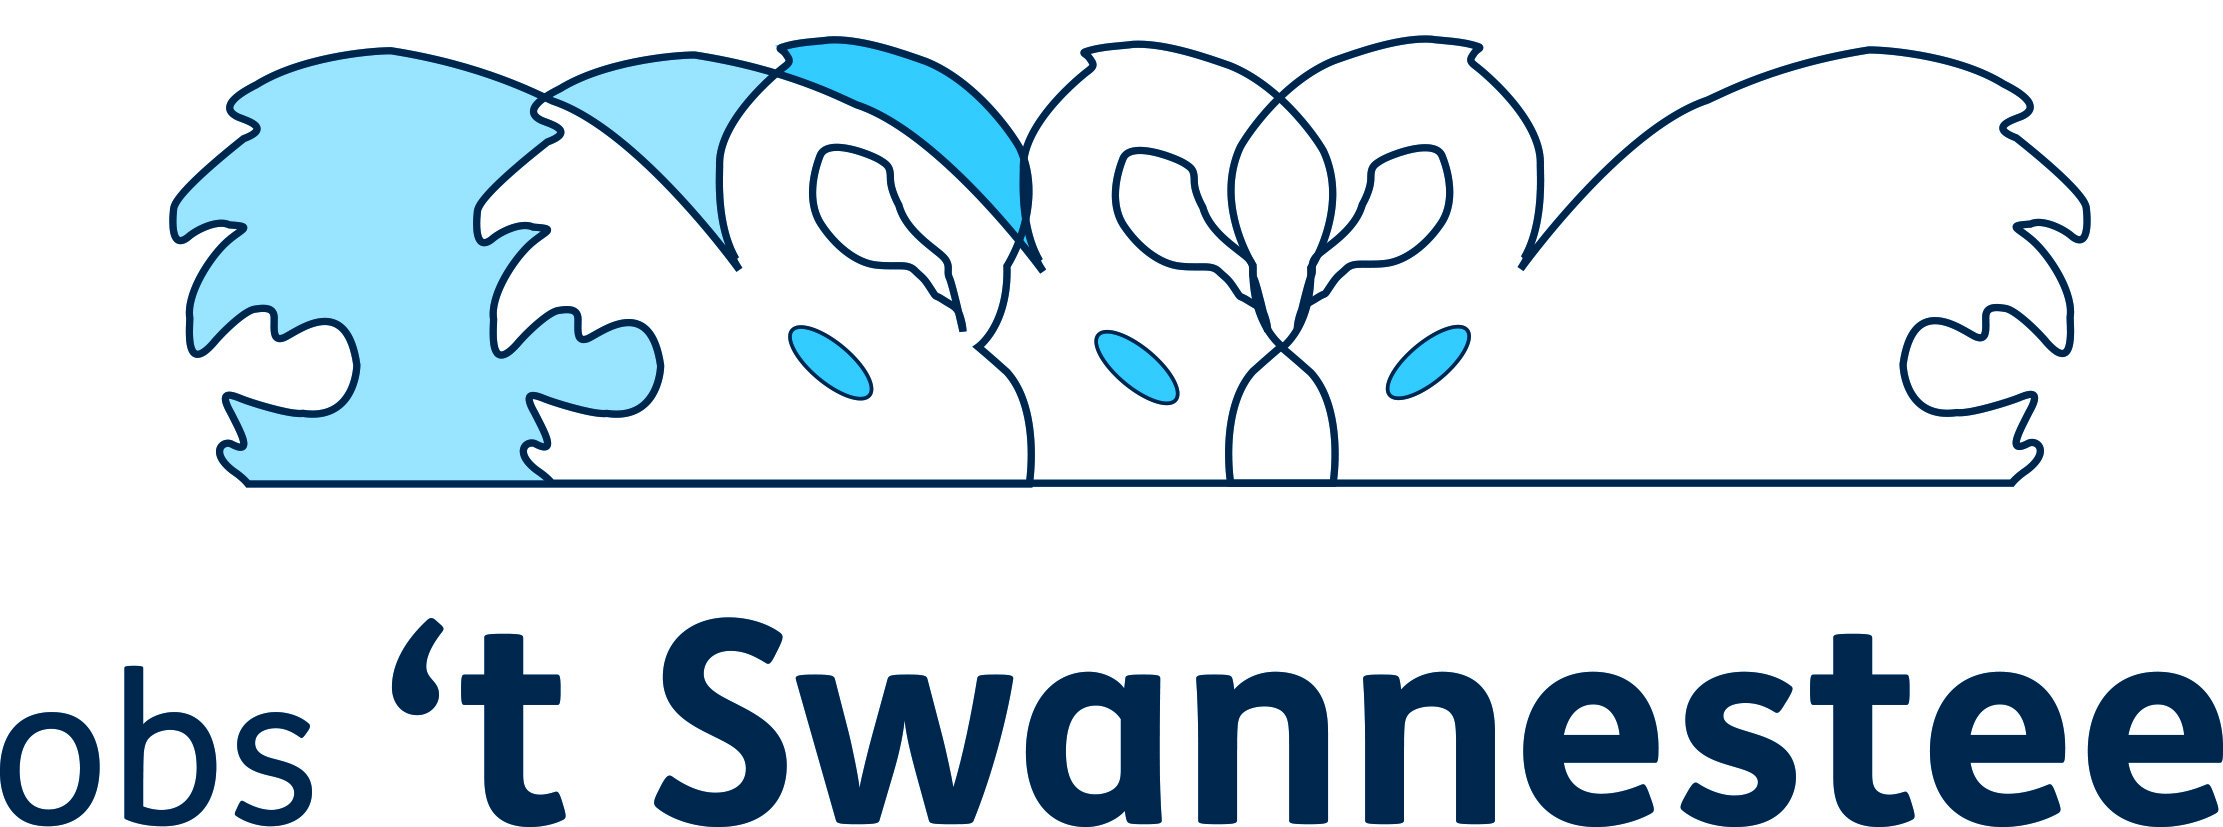 obs 't Swannestee logo